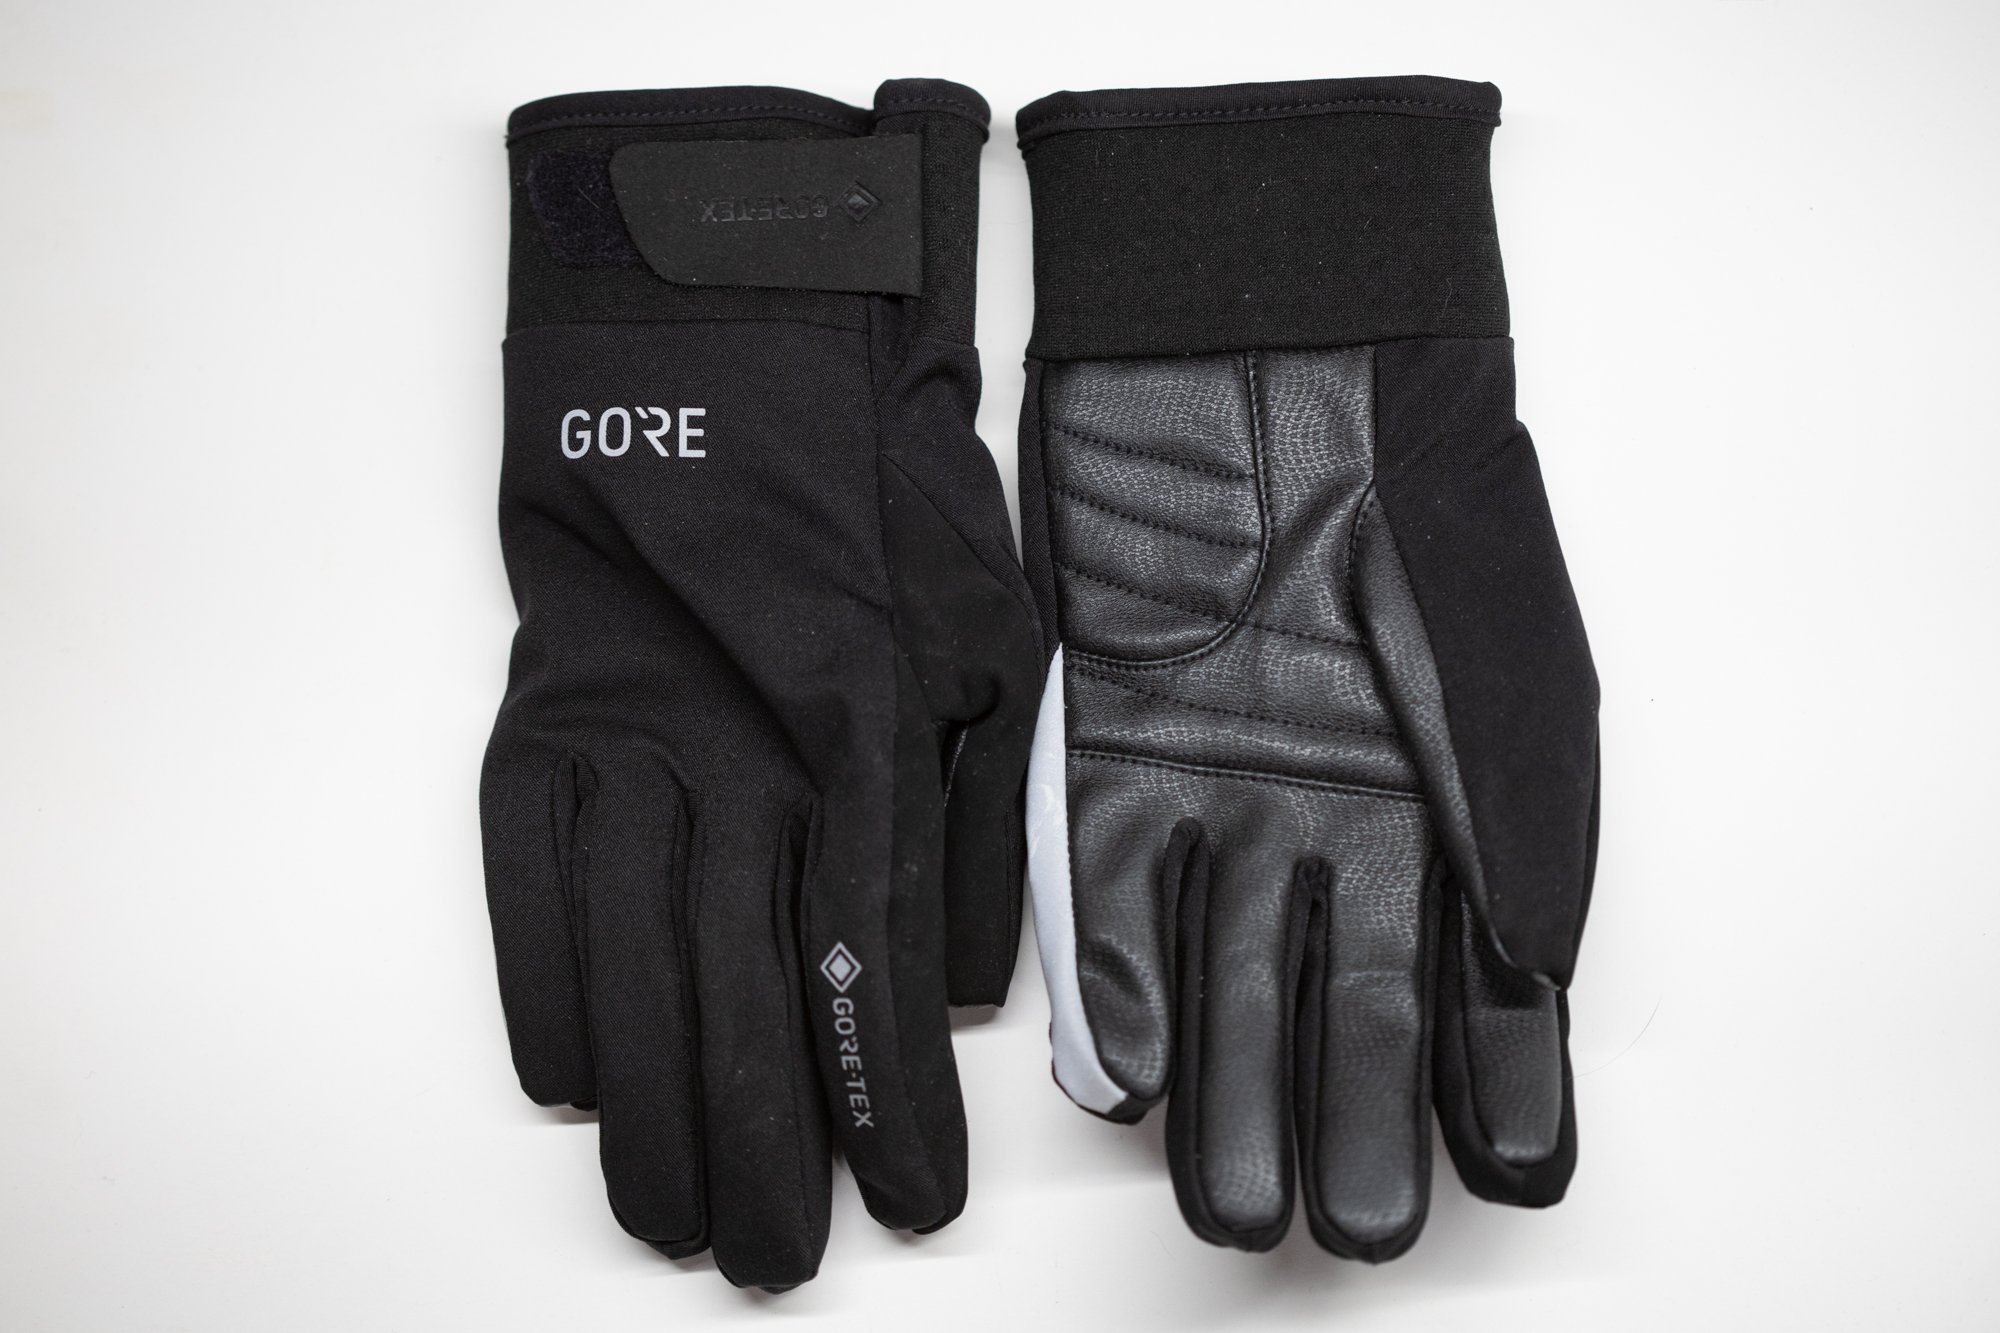 Triban RR 900 Thermal Cycling Gloves review - BikeRadar